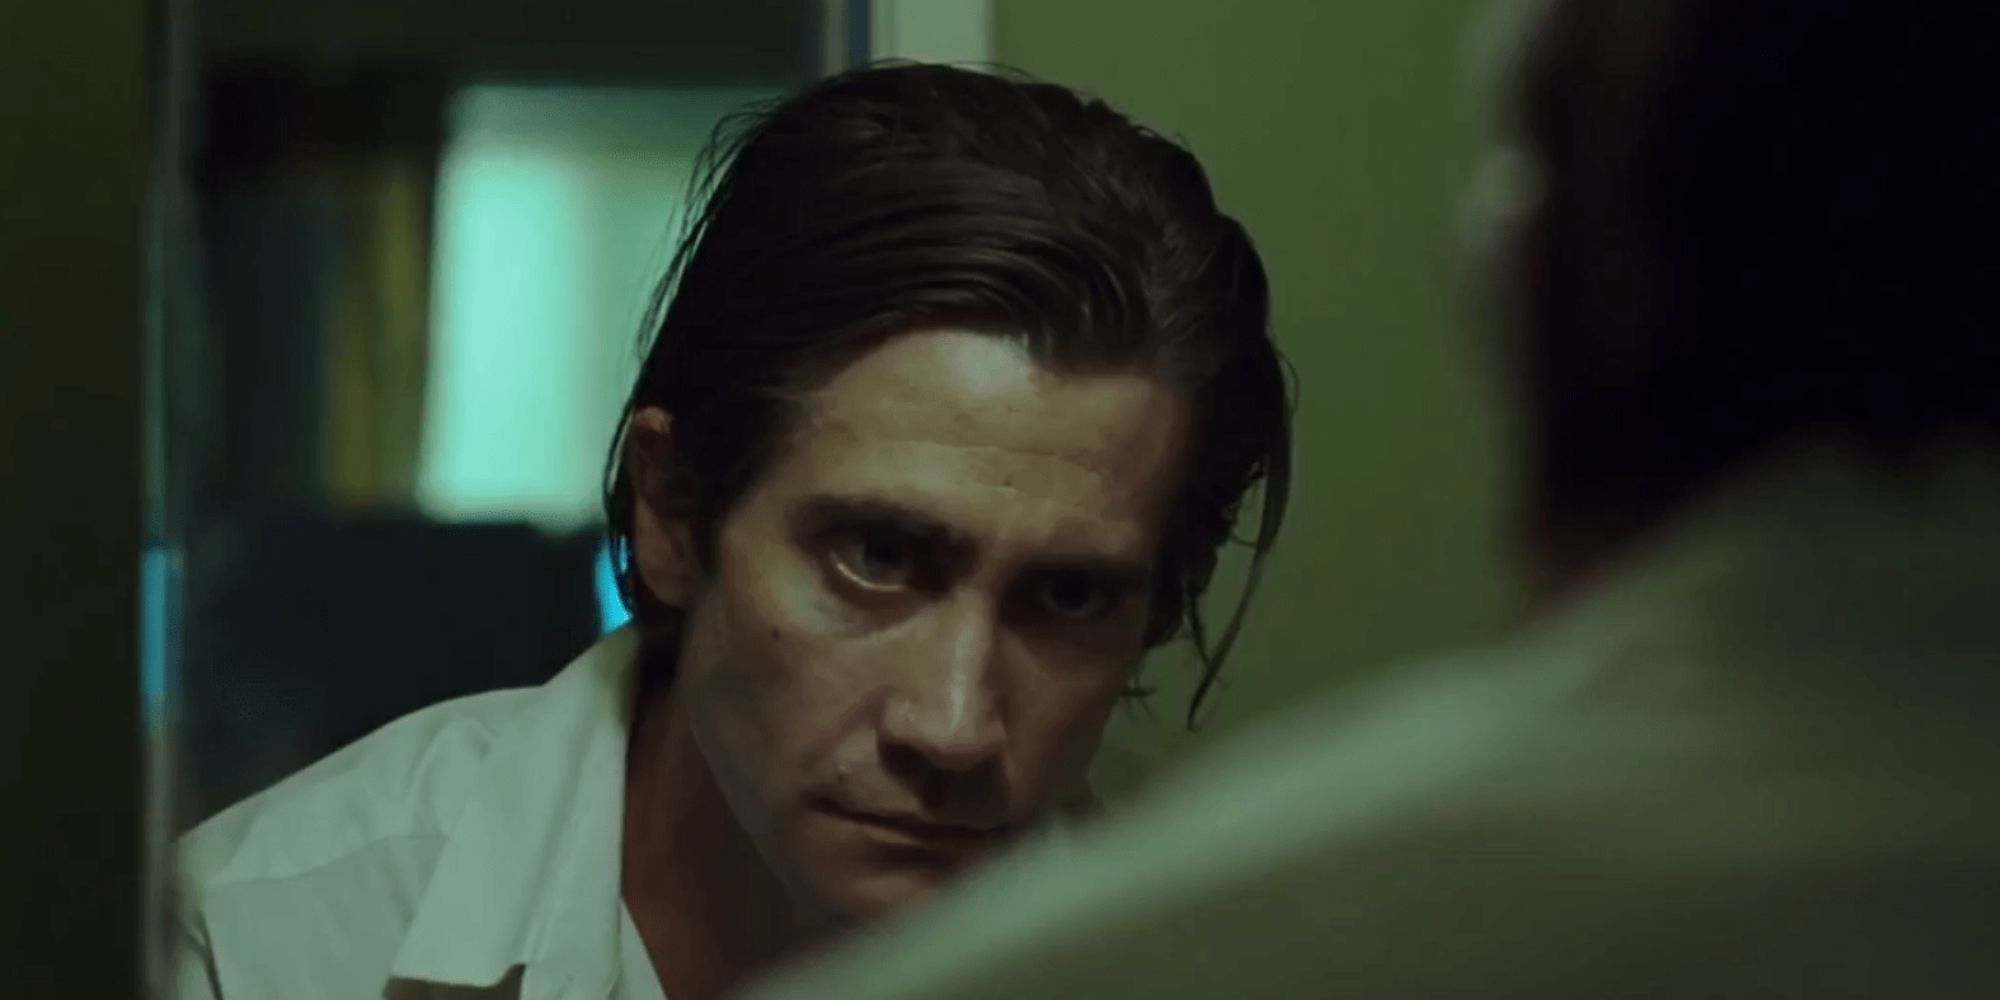 Lou Bloom (Jake Gyllenhaal) staring at a mirror in 'Nightcrawler' (2014)